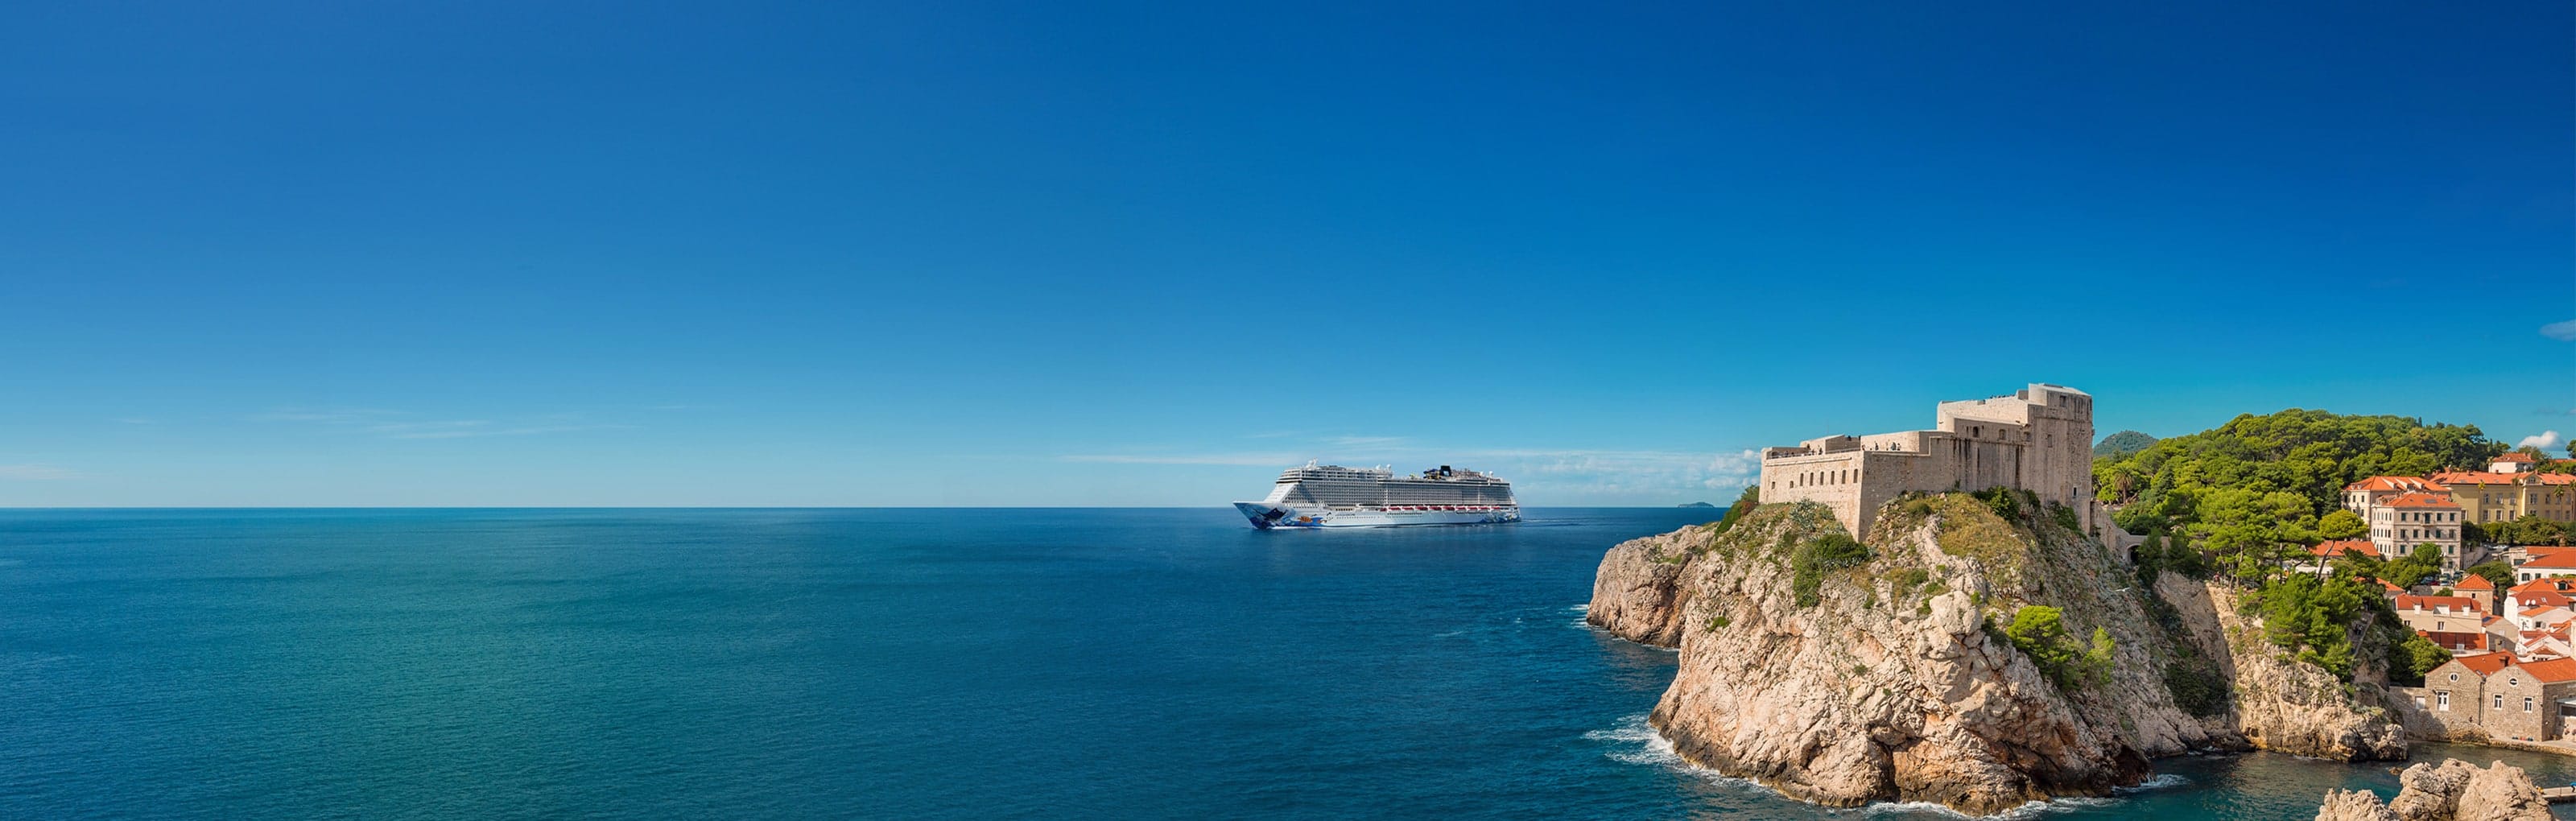 norwegian cruise lines seattle port